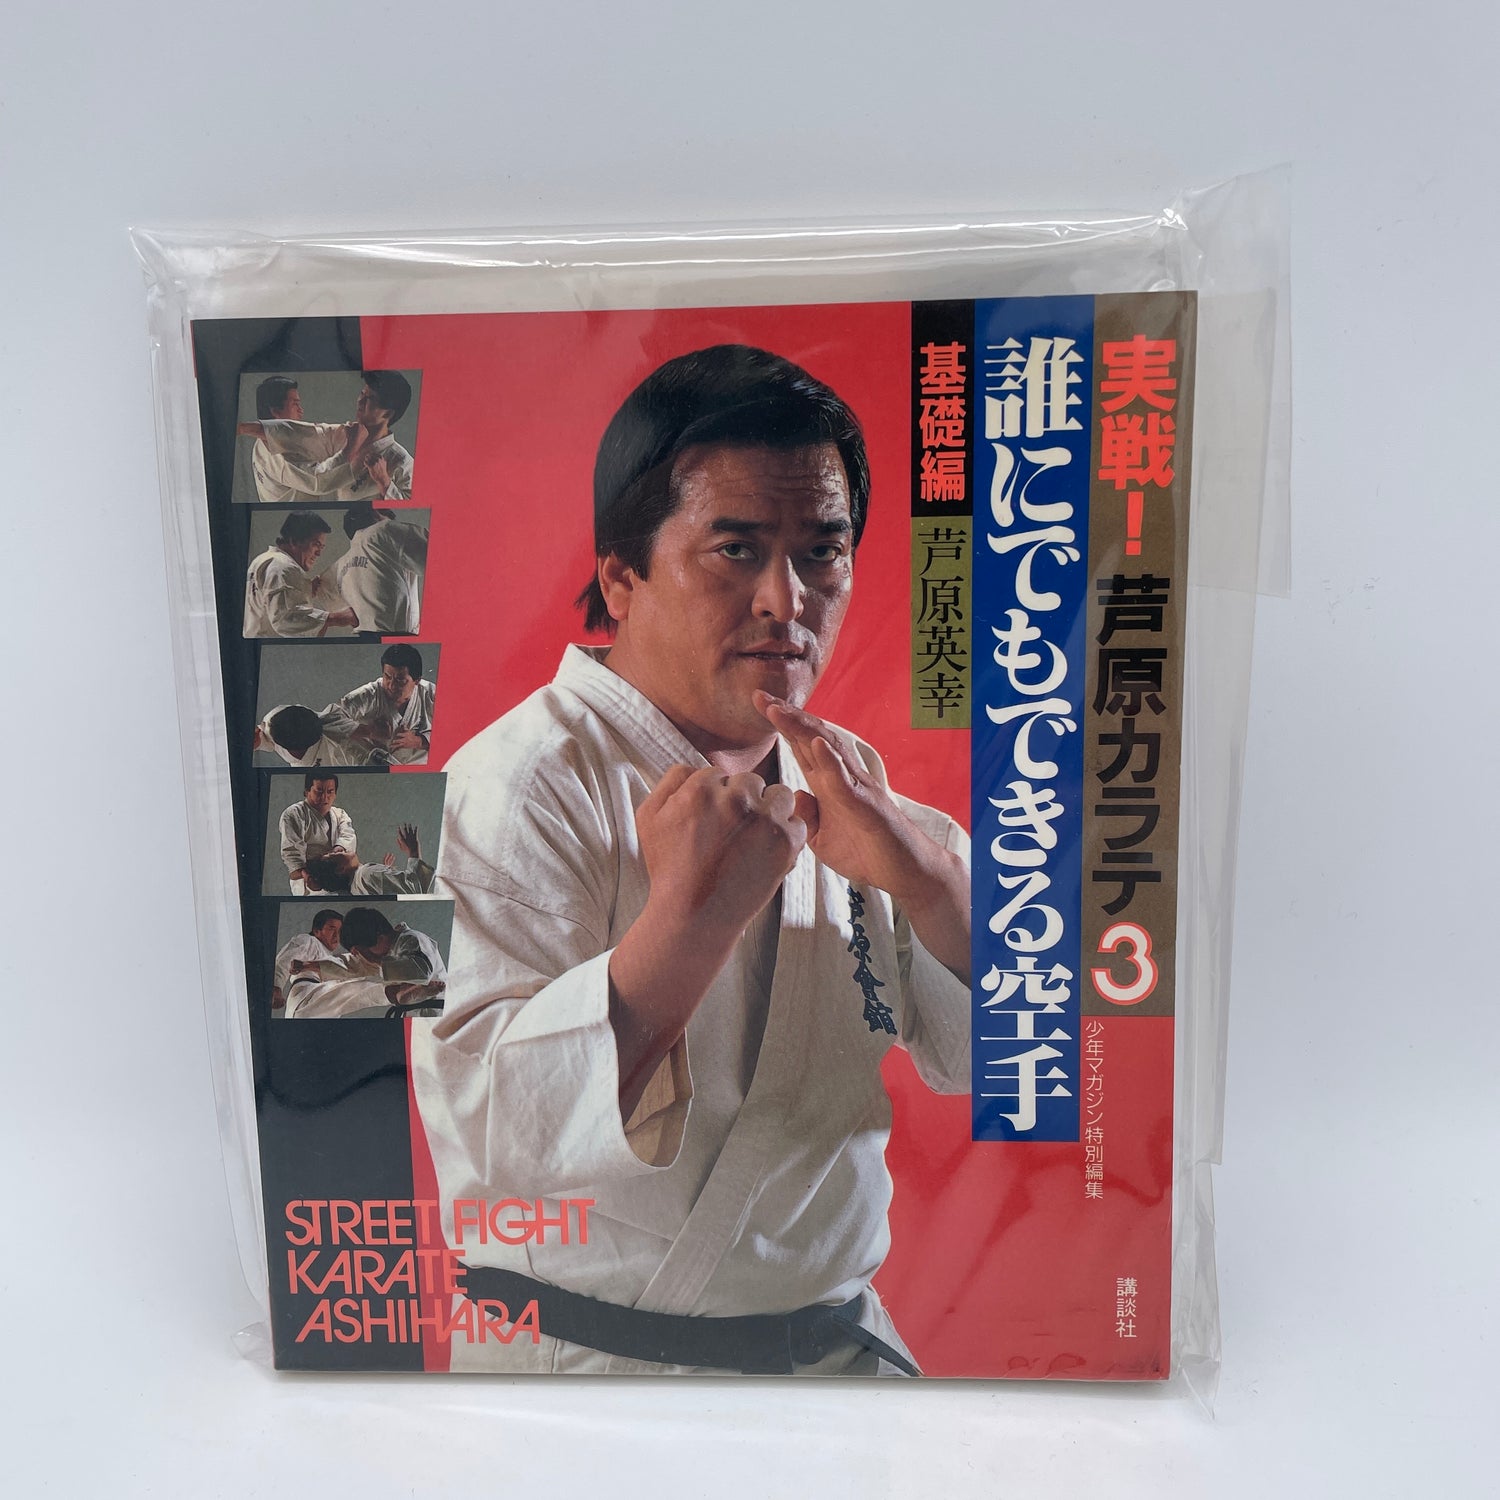 Street Fight Karate Book 3 by Hideyuki Ashihara (Preowned)